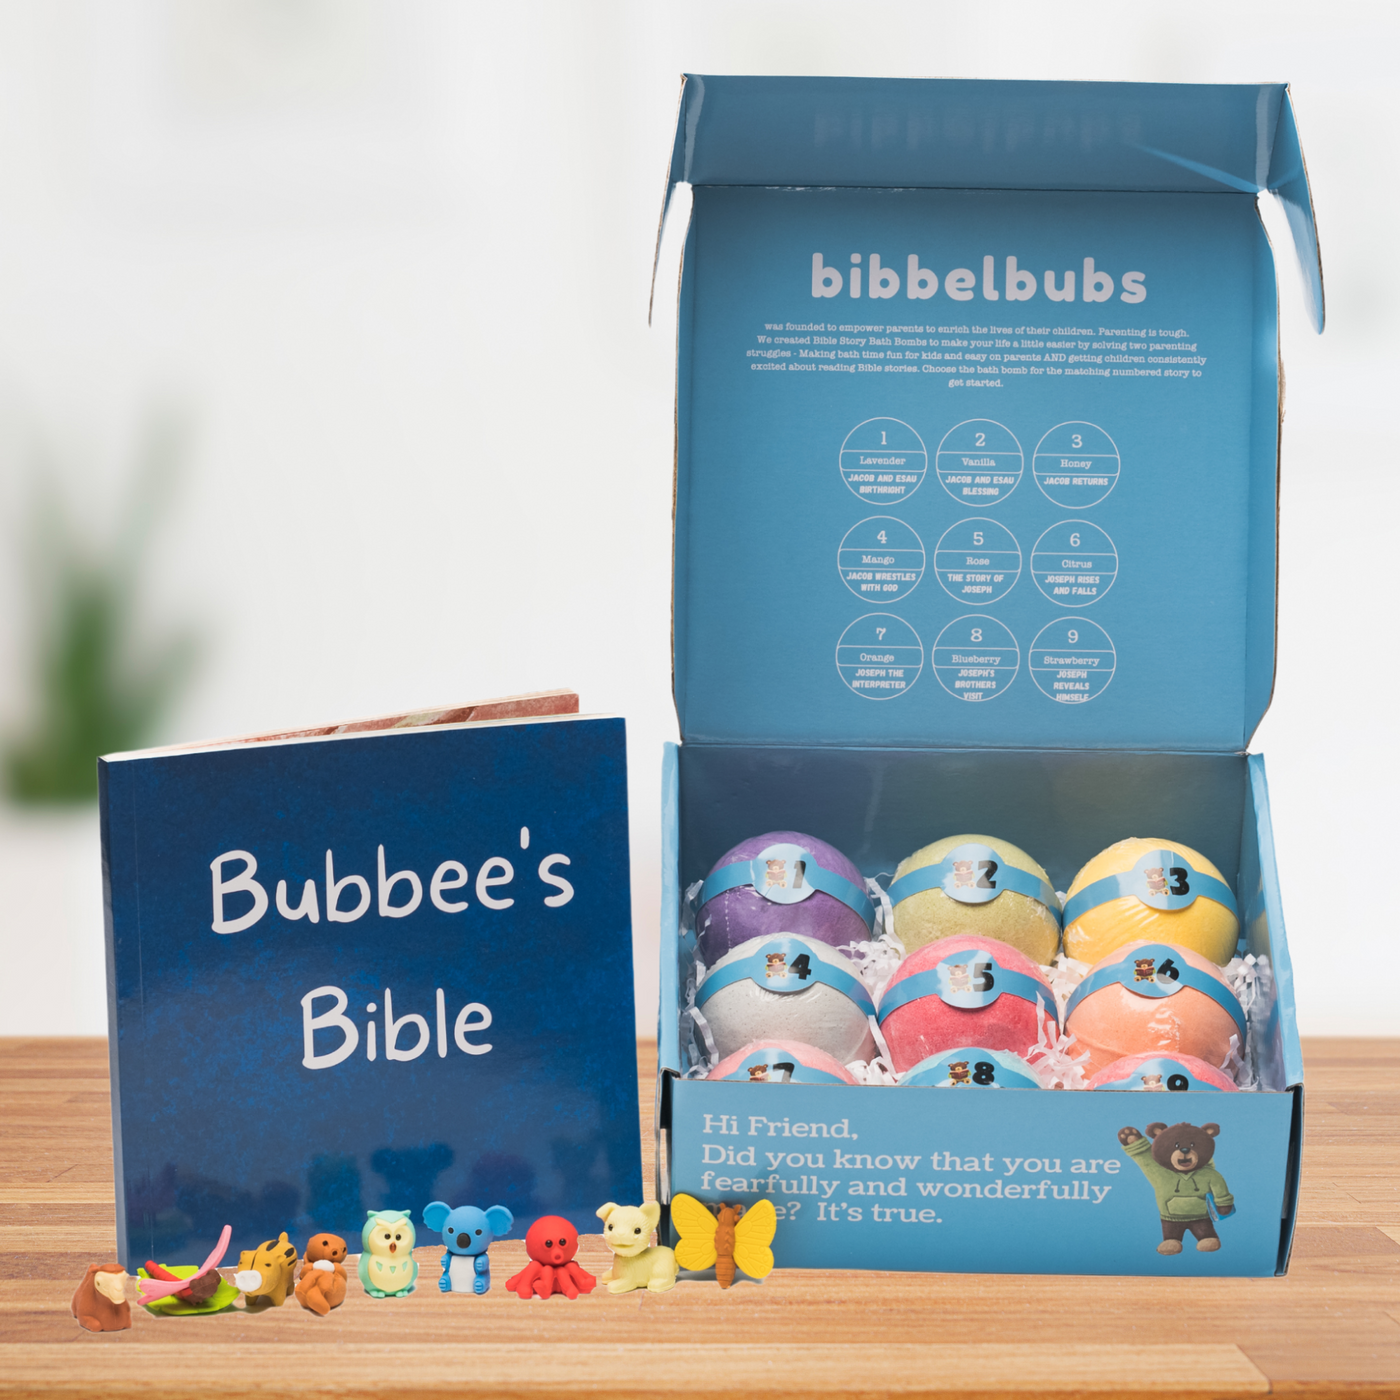 Bibbelbubs Bath Bomb Box - Jacob to Joseph